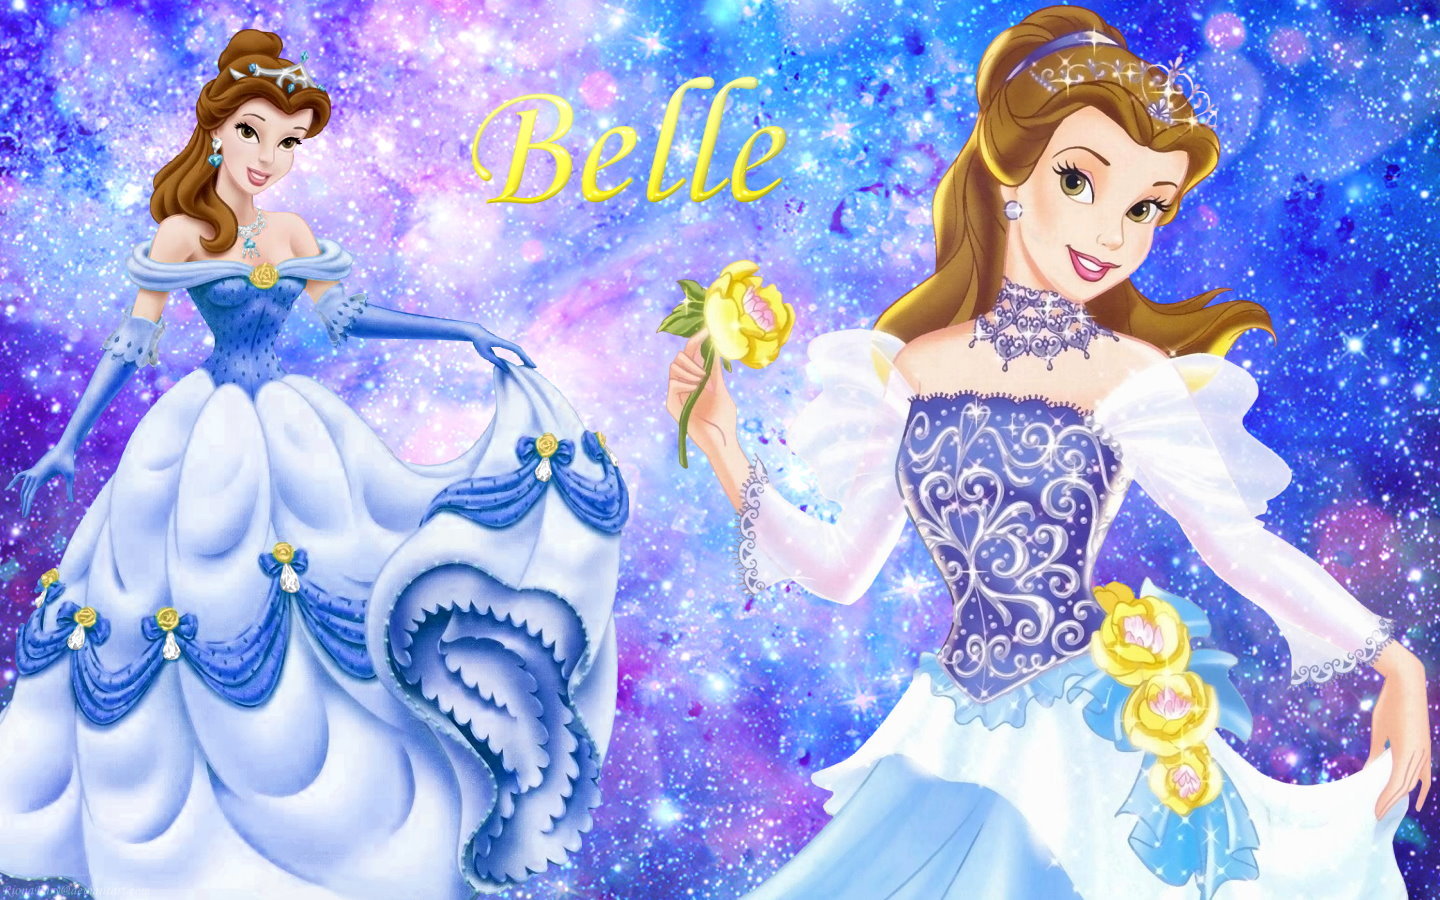 Belle princess